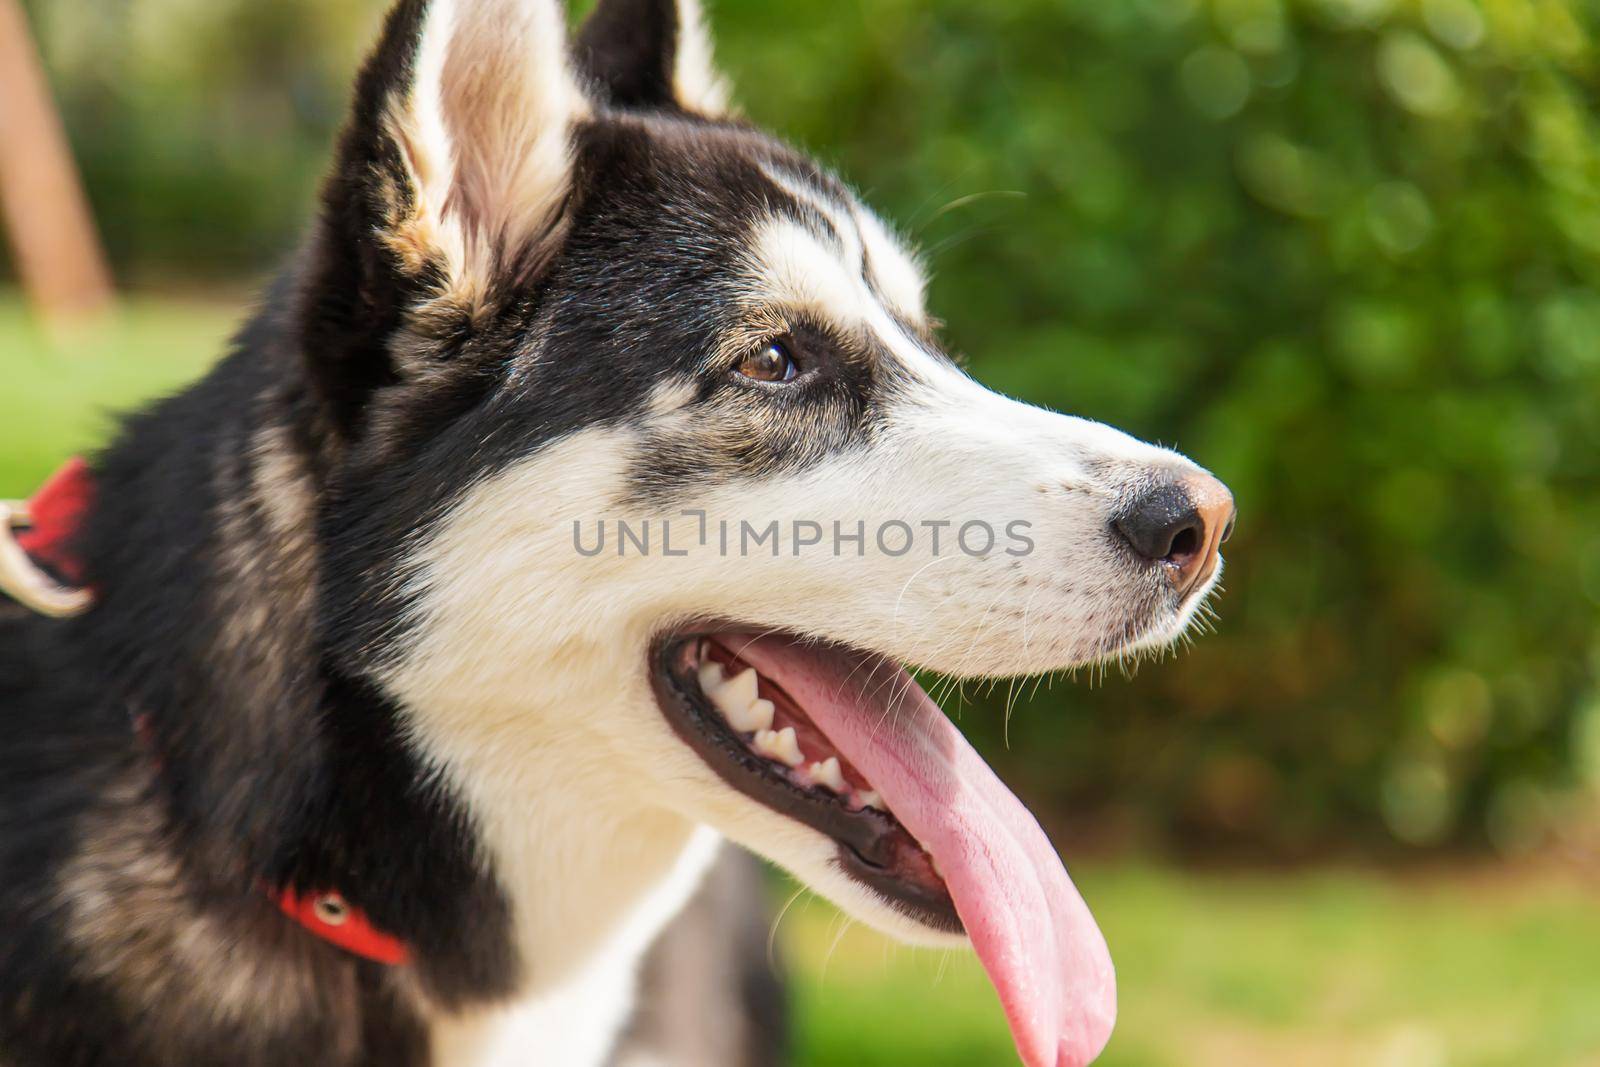 Husky dog portrait beautiful photo. Selective focus. Animal.